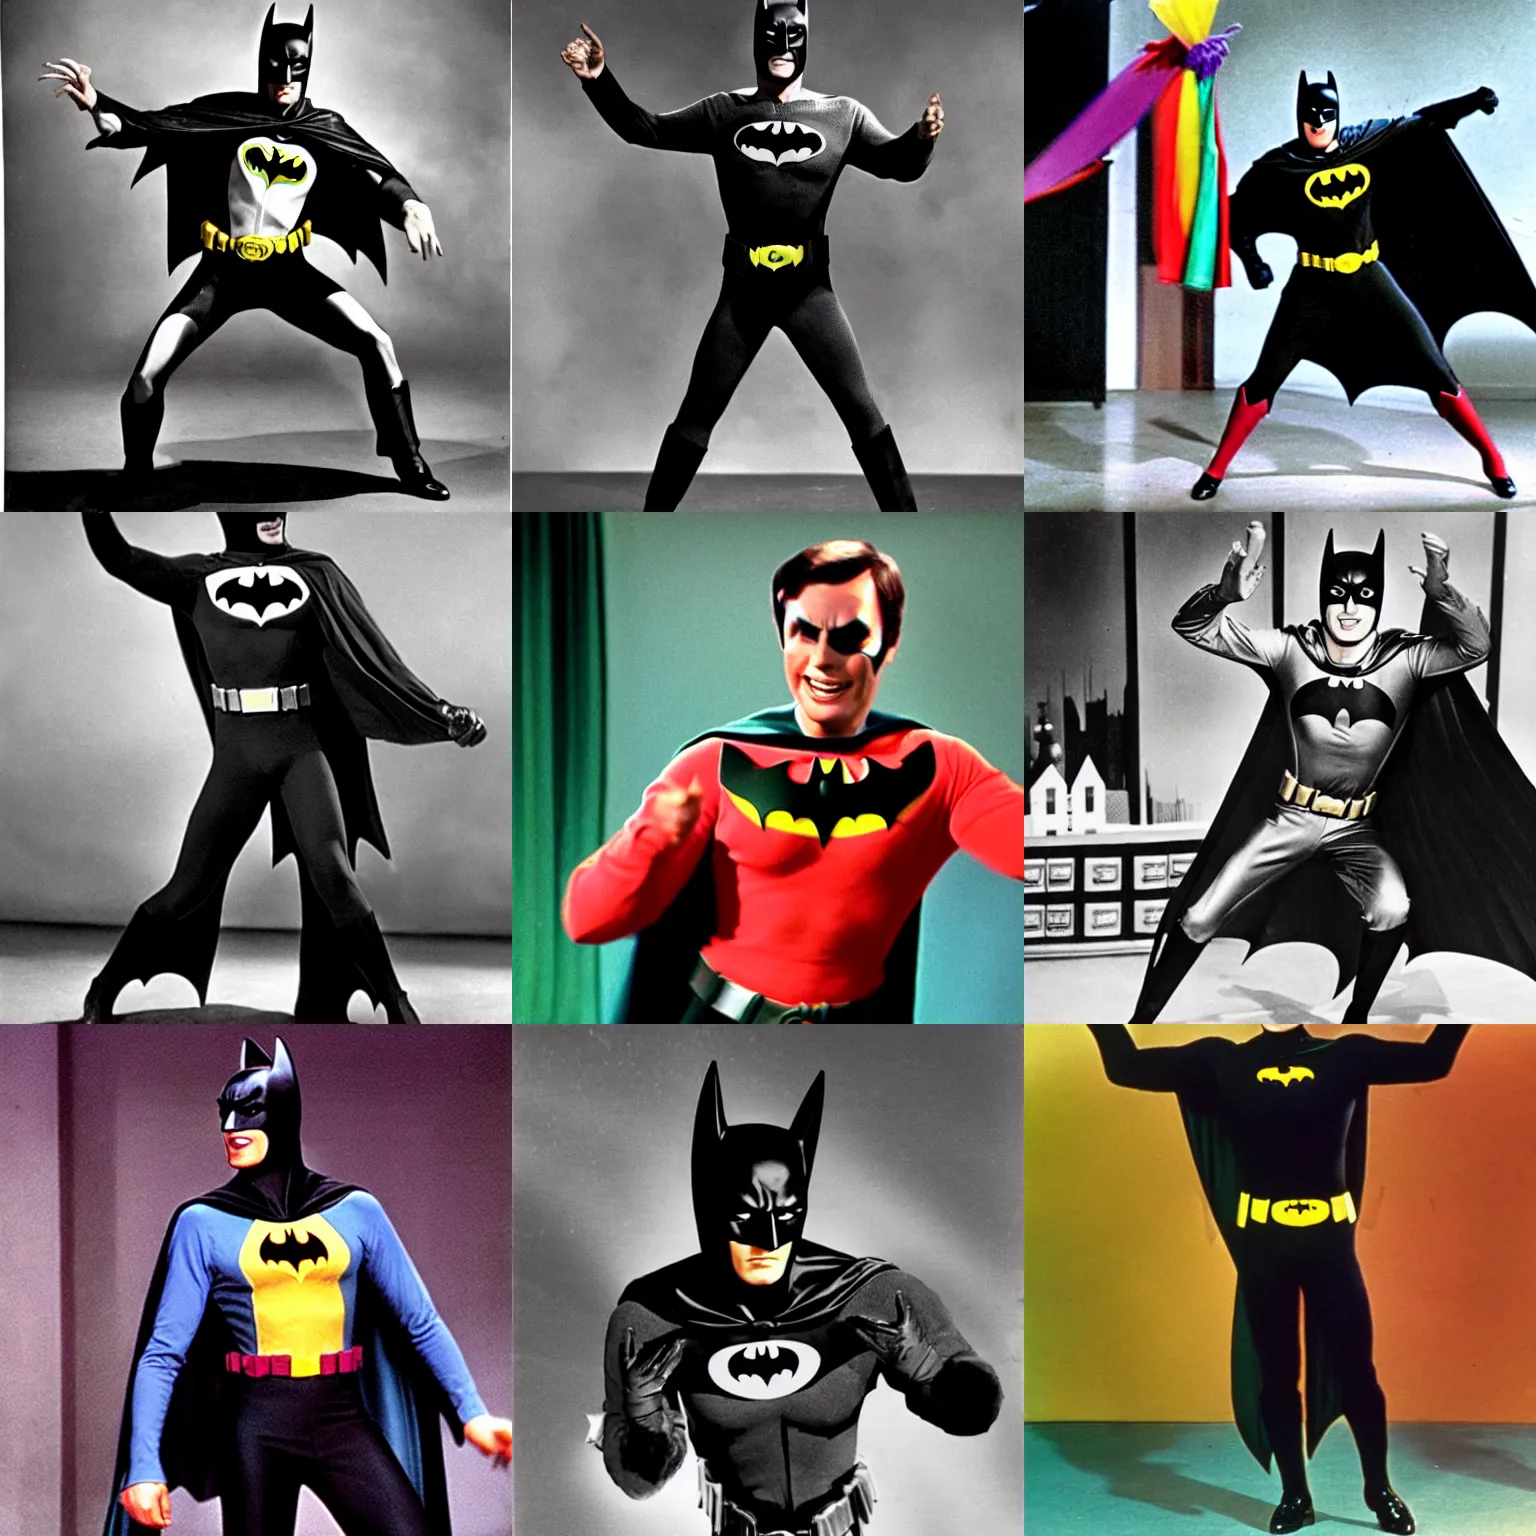 Prompt: Batman wearing a rainbow bat suit, dancing, 1960s television show, still, Adam West, happy, silly